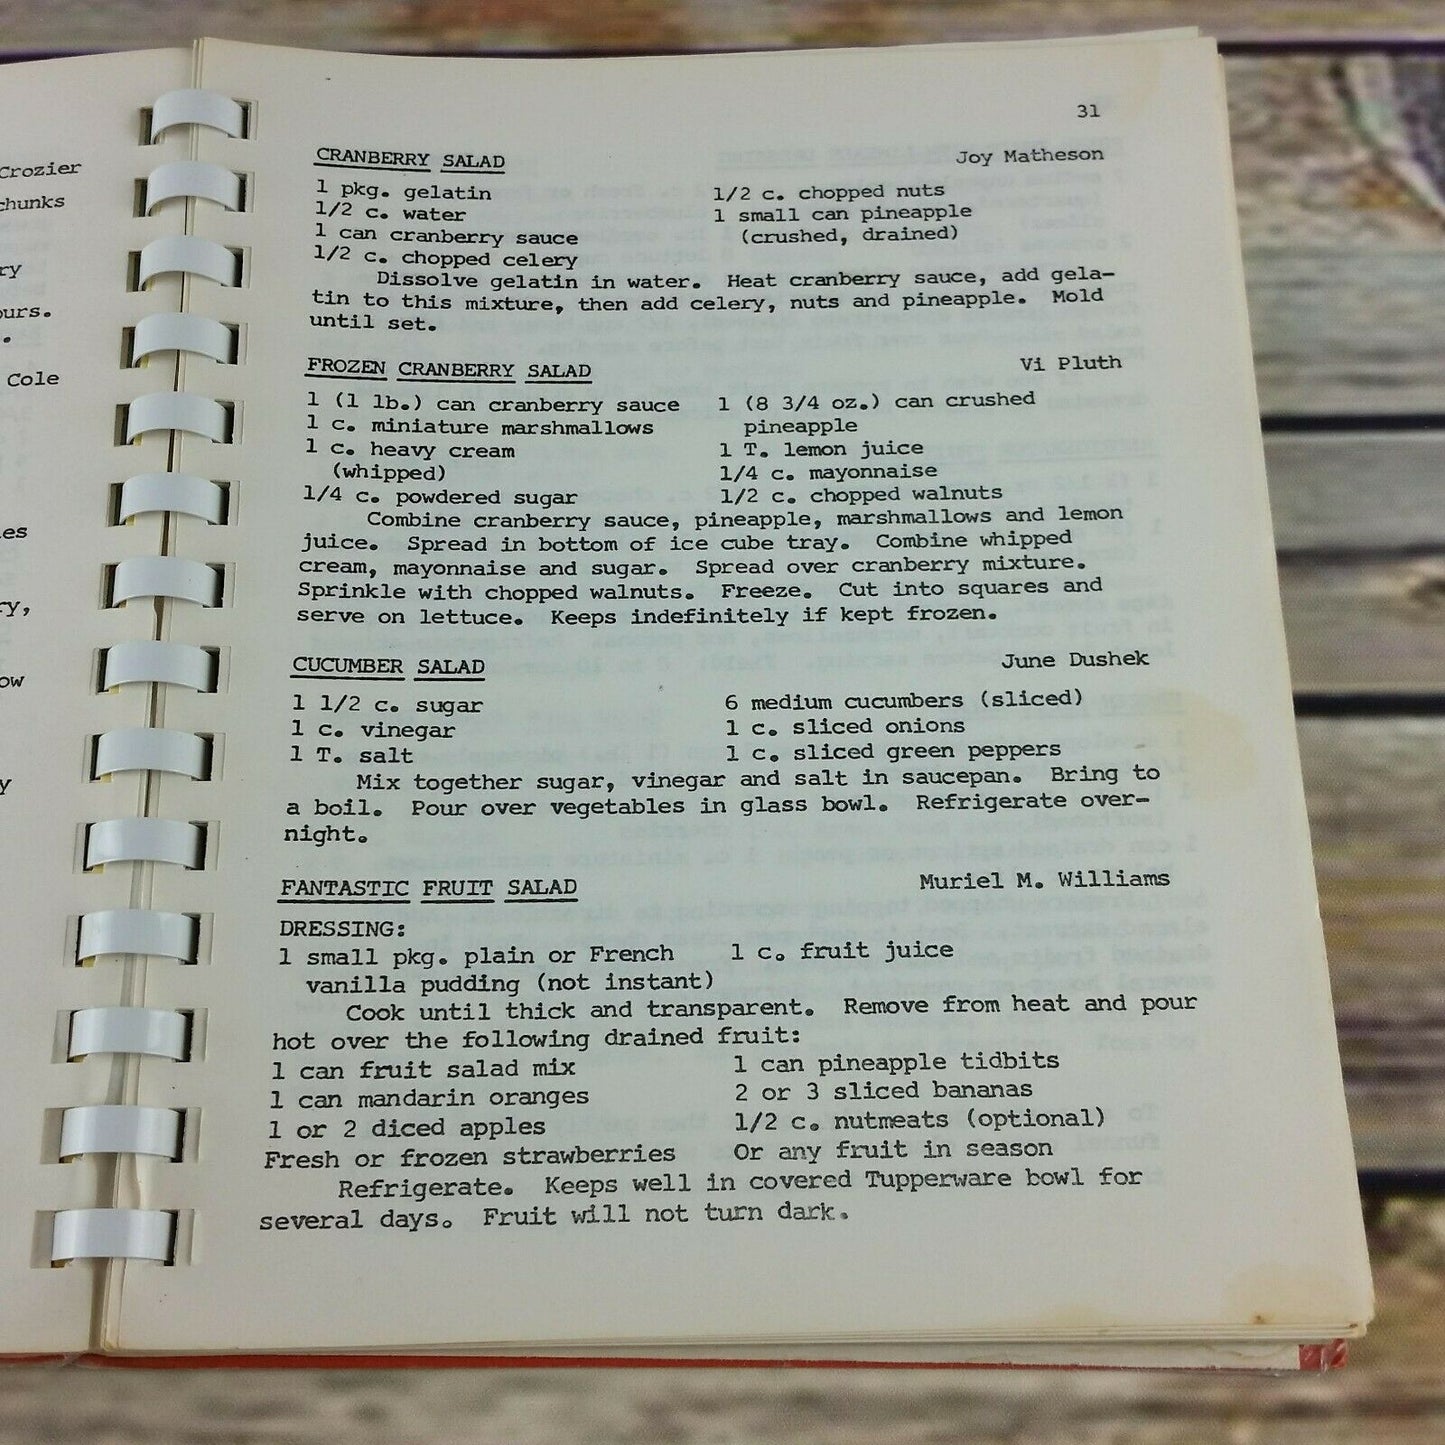 Vintage Washington Cookbook Treasure Chest Recipes Oak Harbor Nav Air 1982 - At Grandma's Table